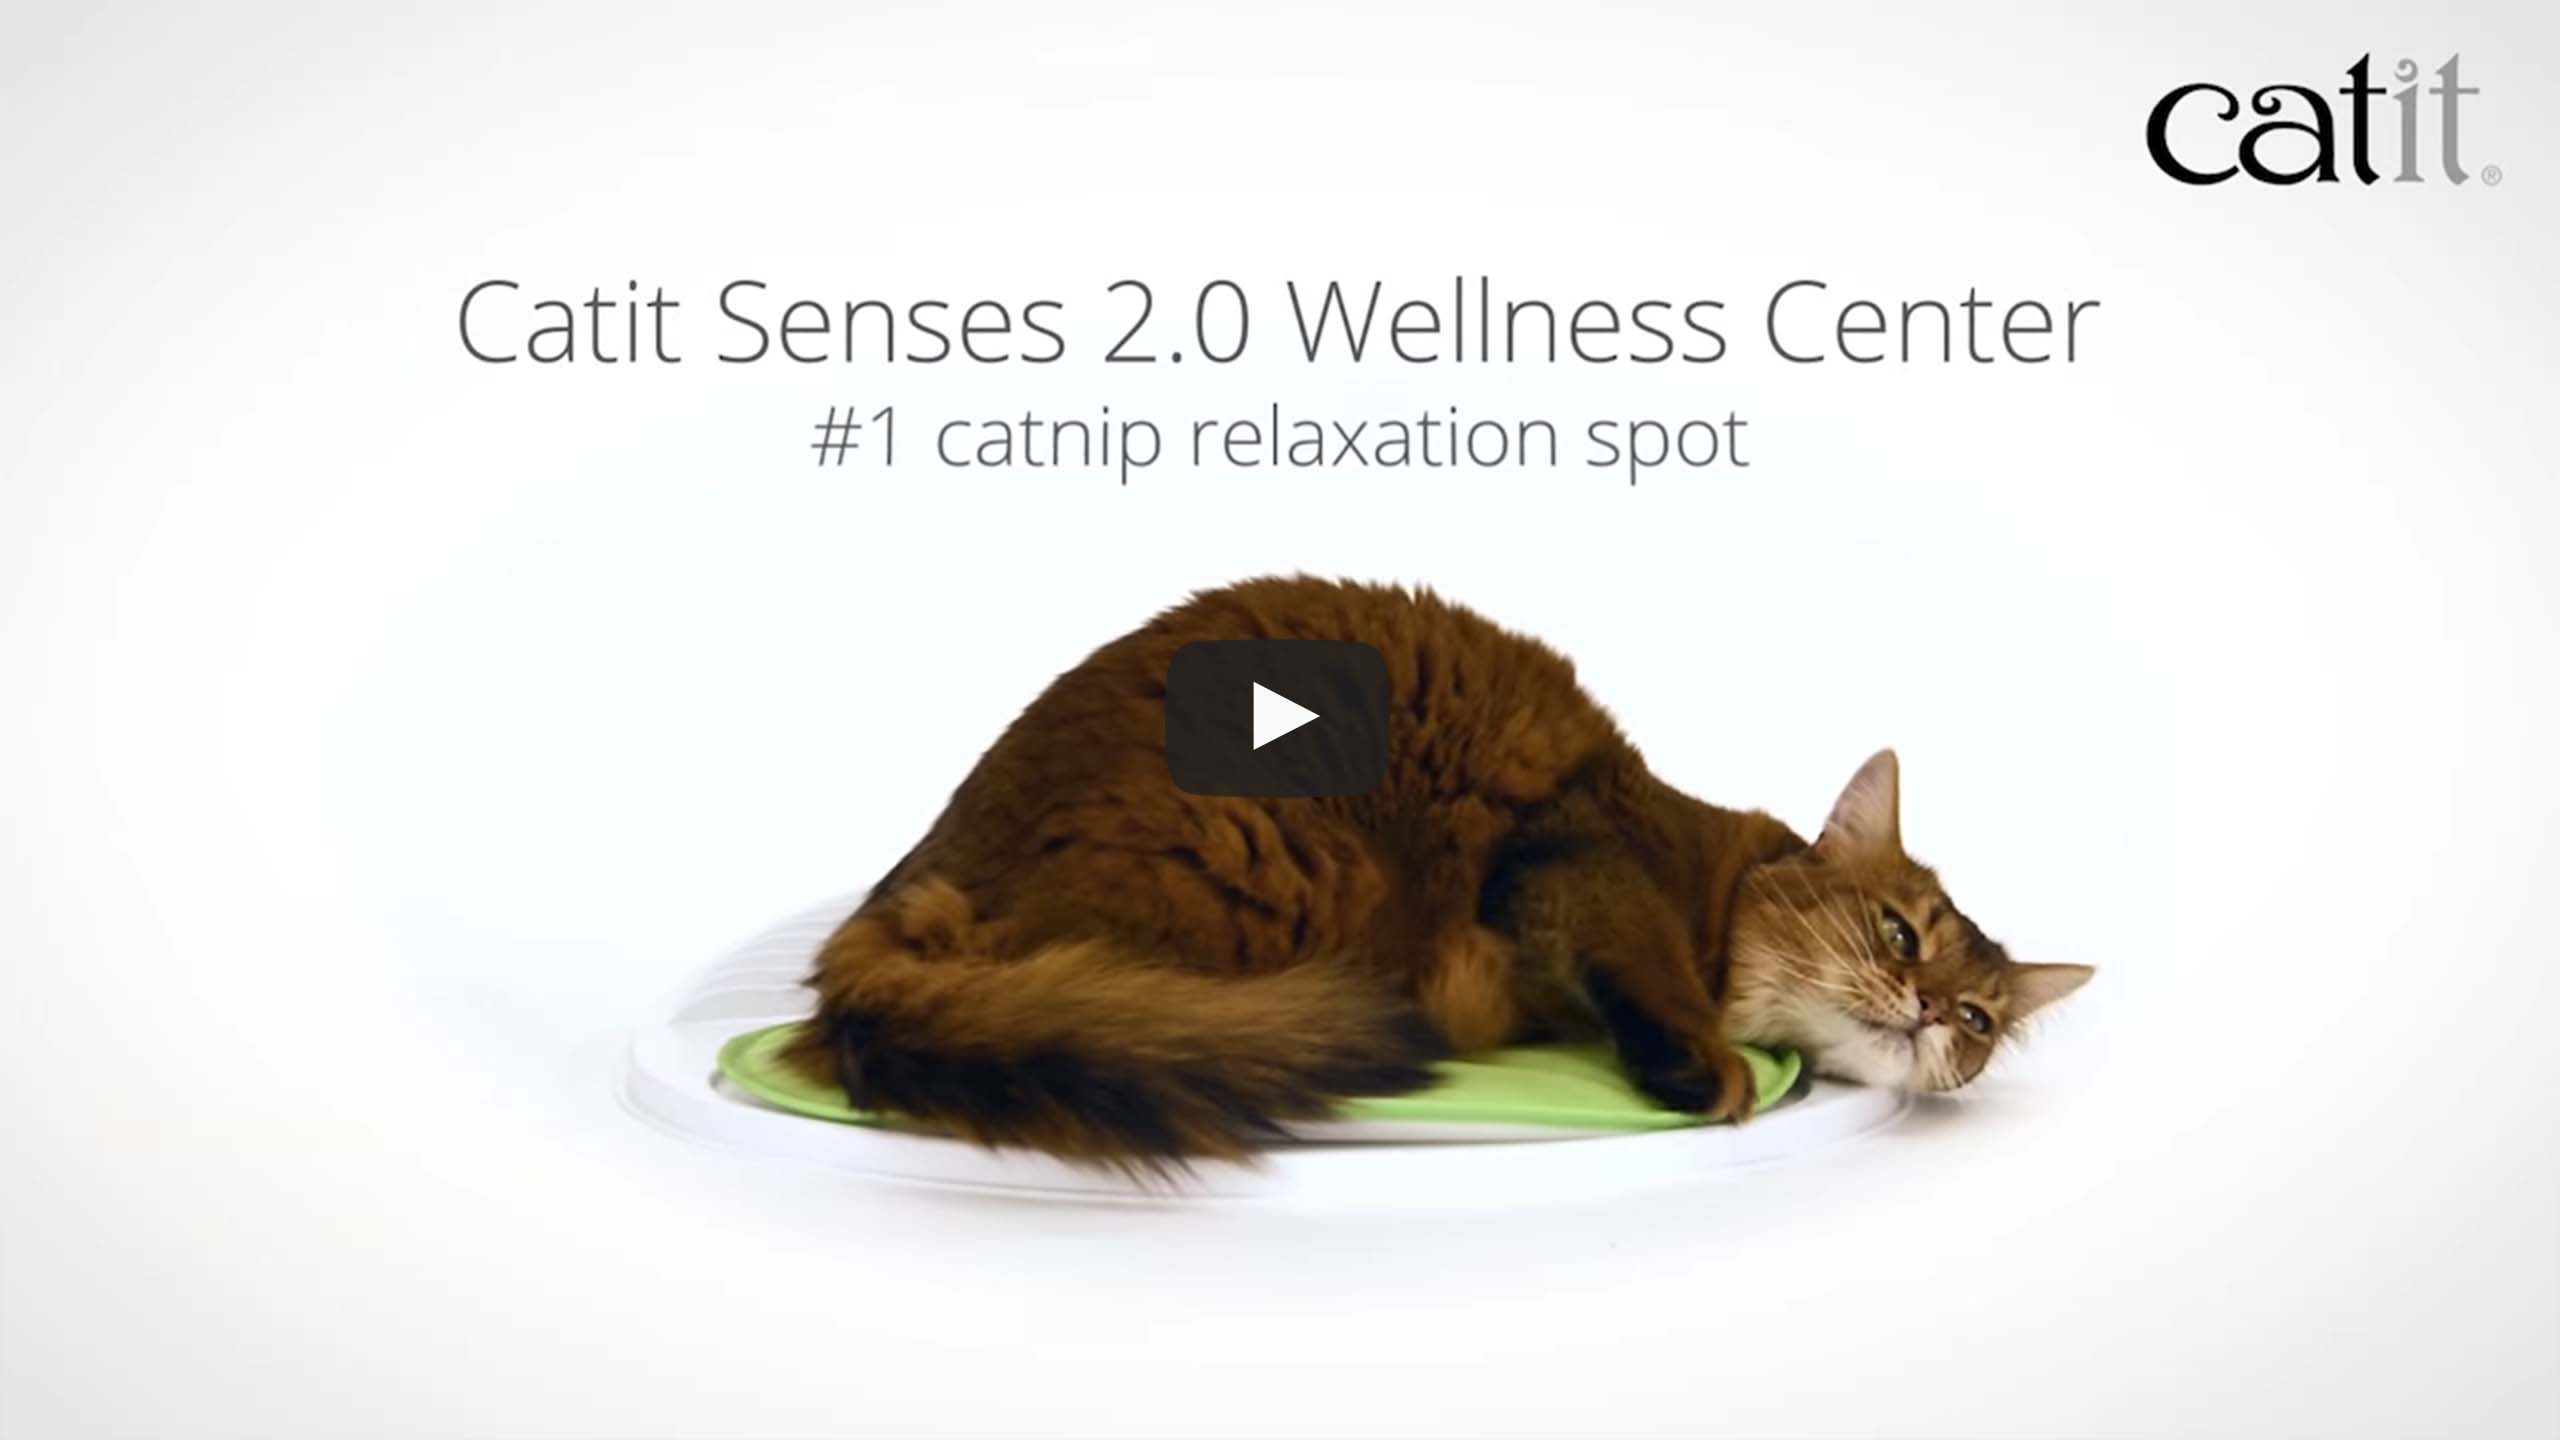 Wideo Catit Senses Wellness Center